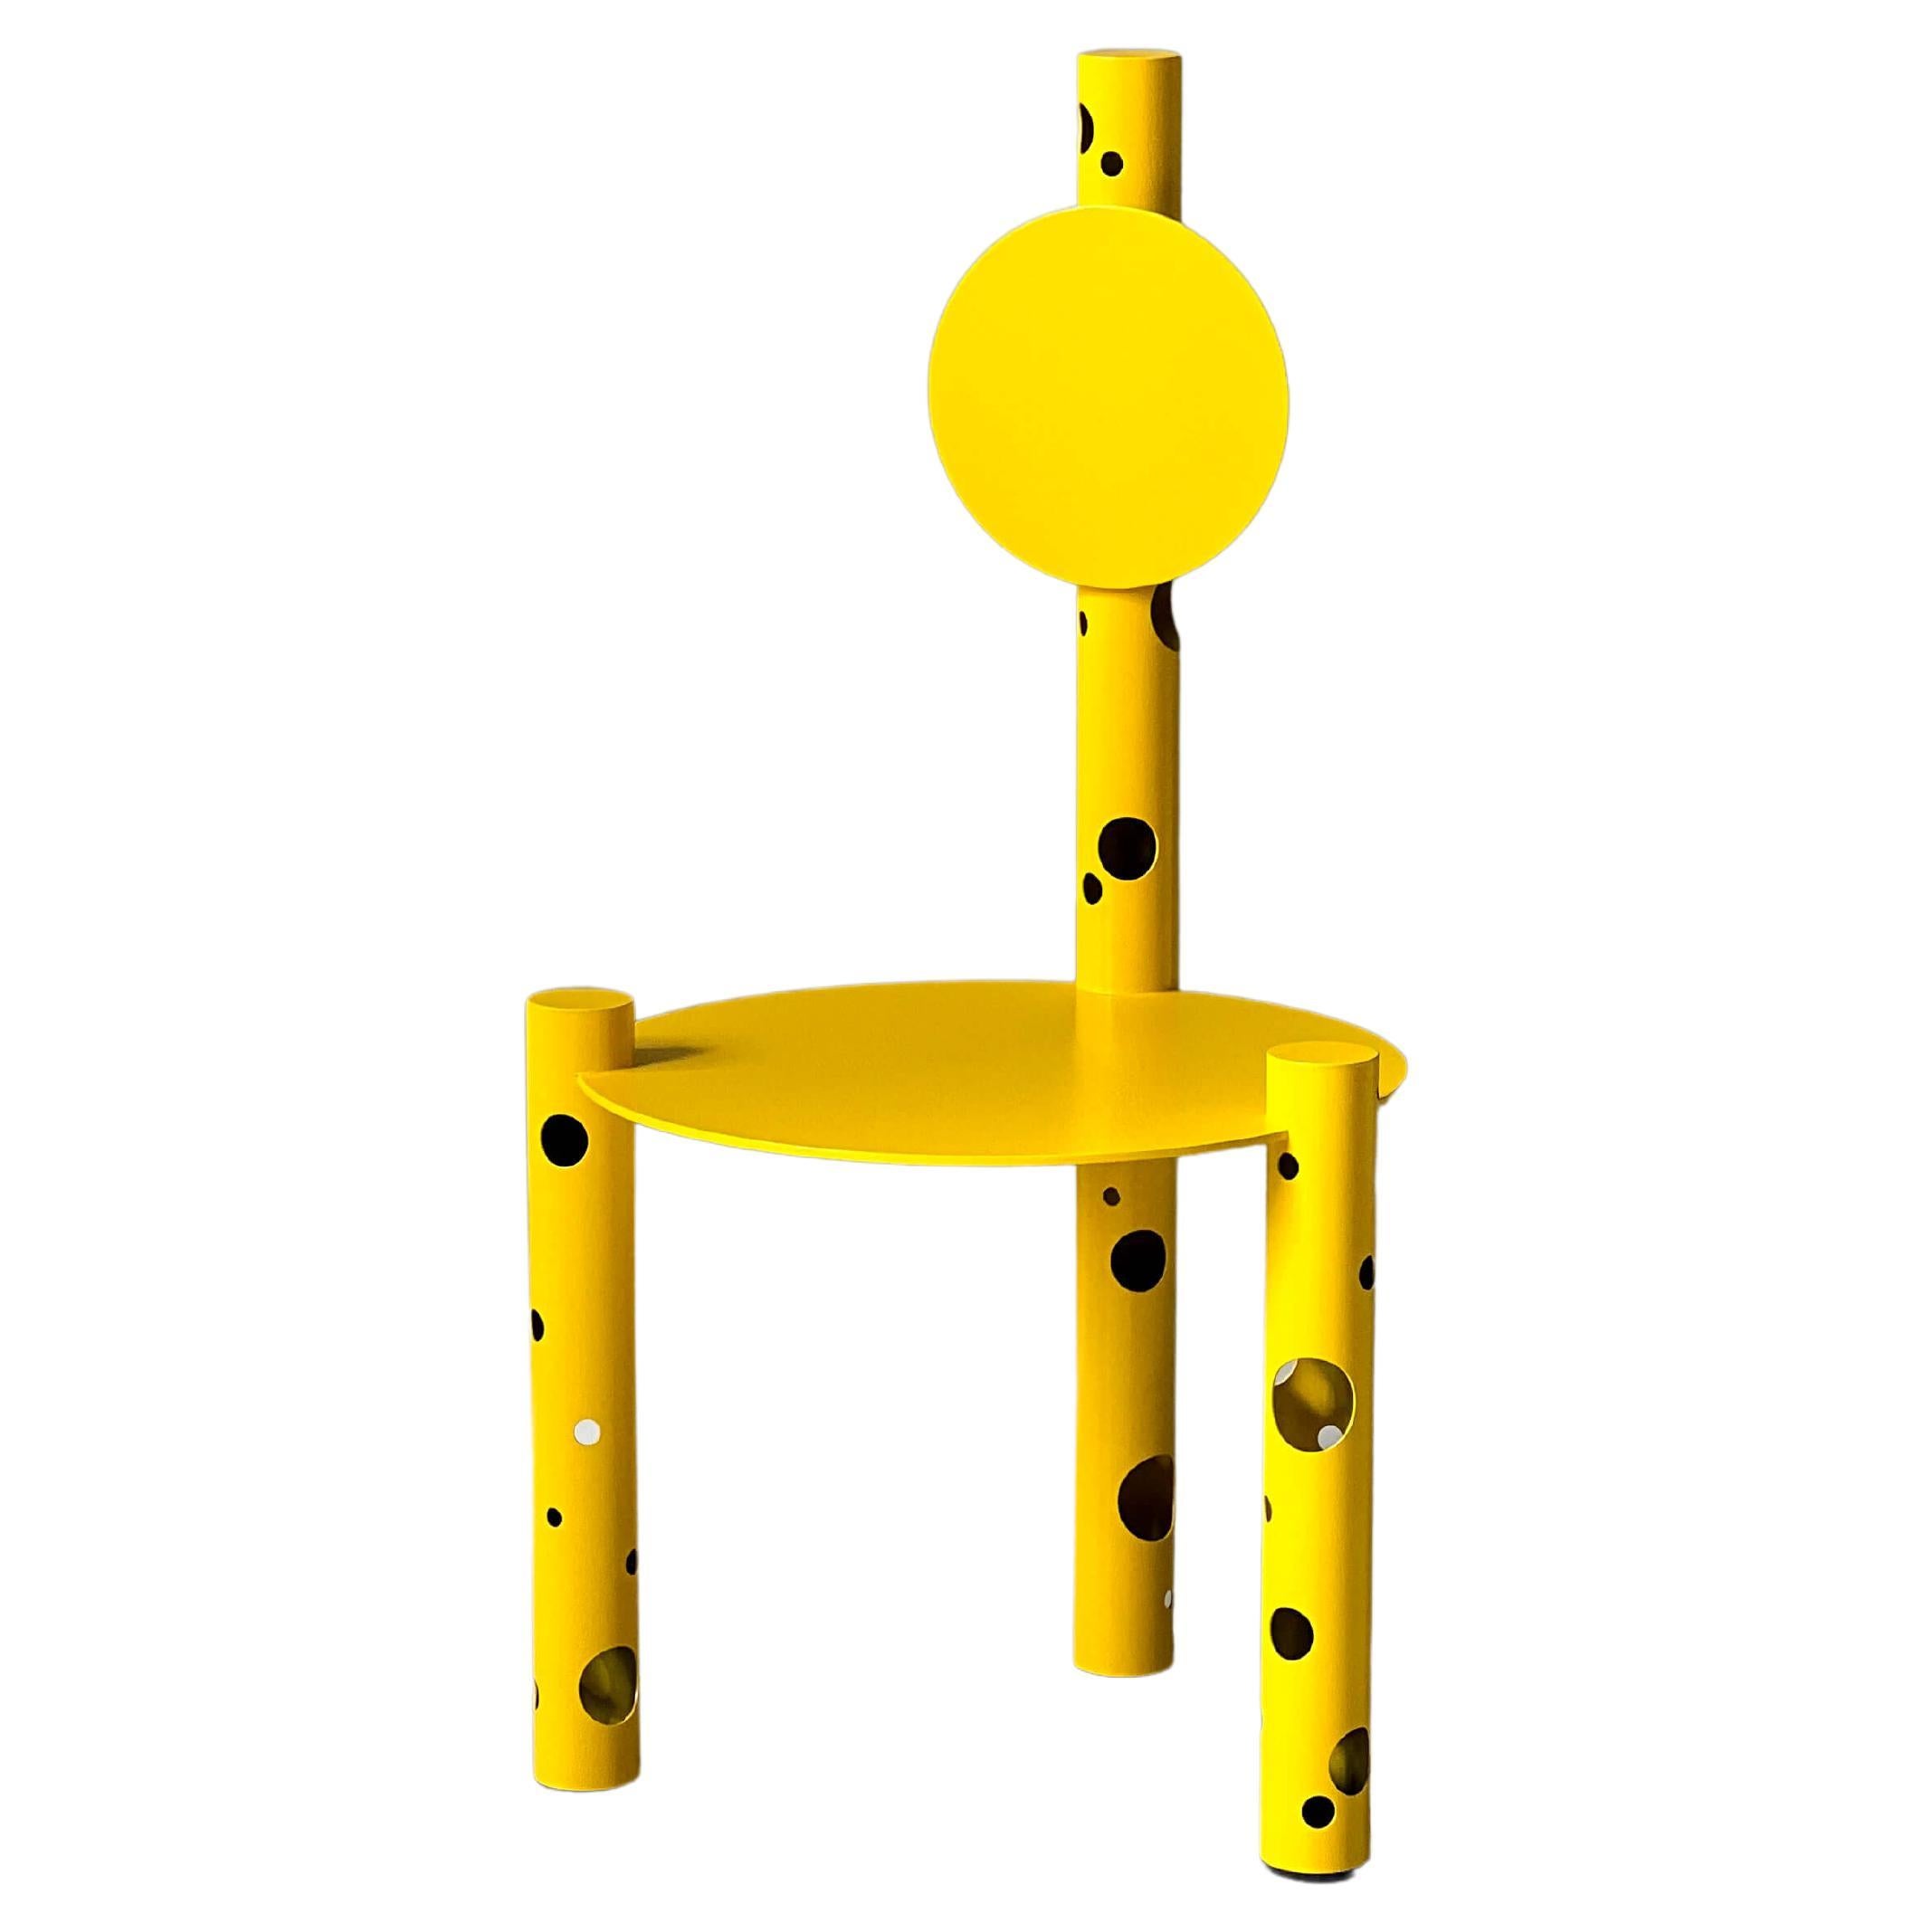 Spinzi SIlös Chair, Collectible Italian Design, Bright Yellow Sculptural Seating (siège sculptural jaune vif)